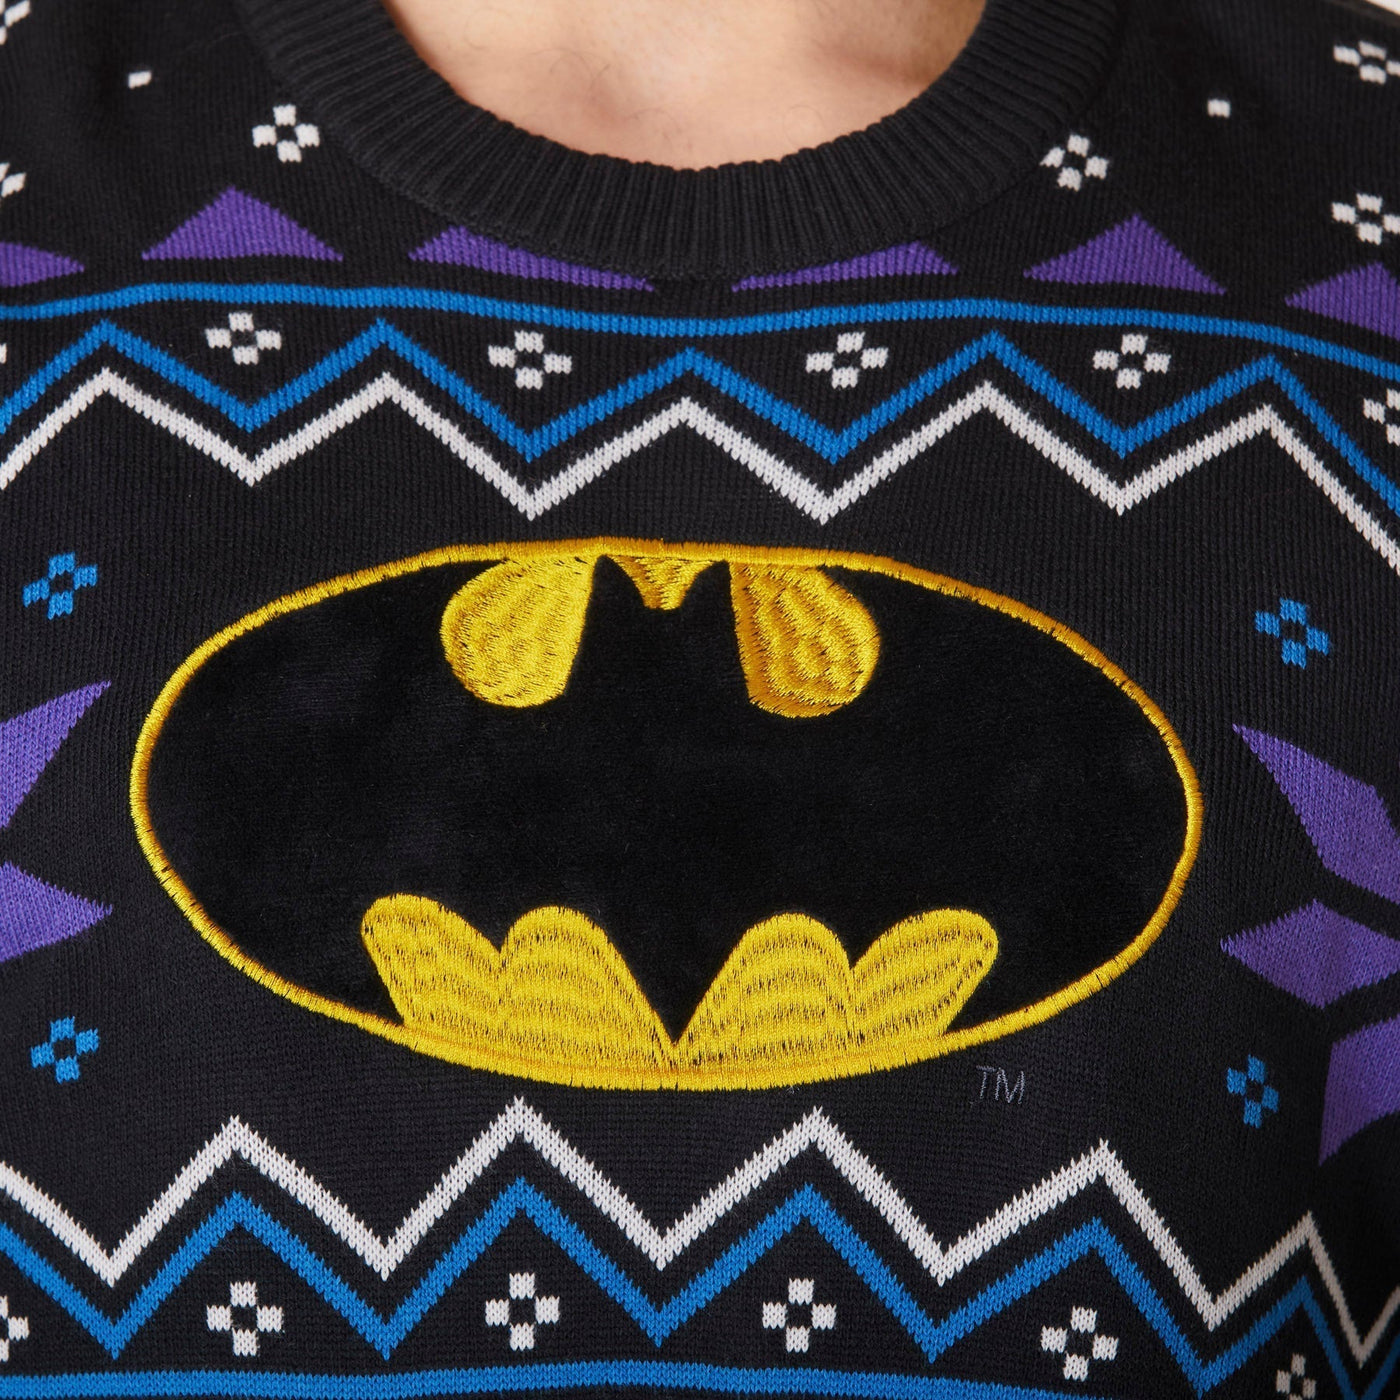 Batman Julesweater Herre